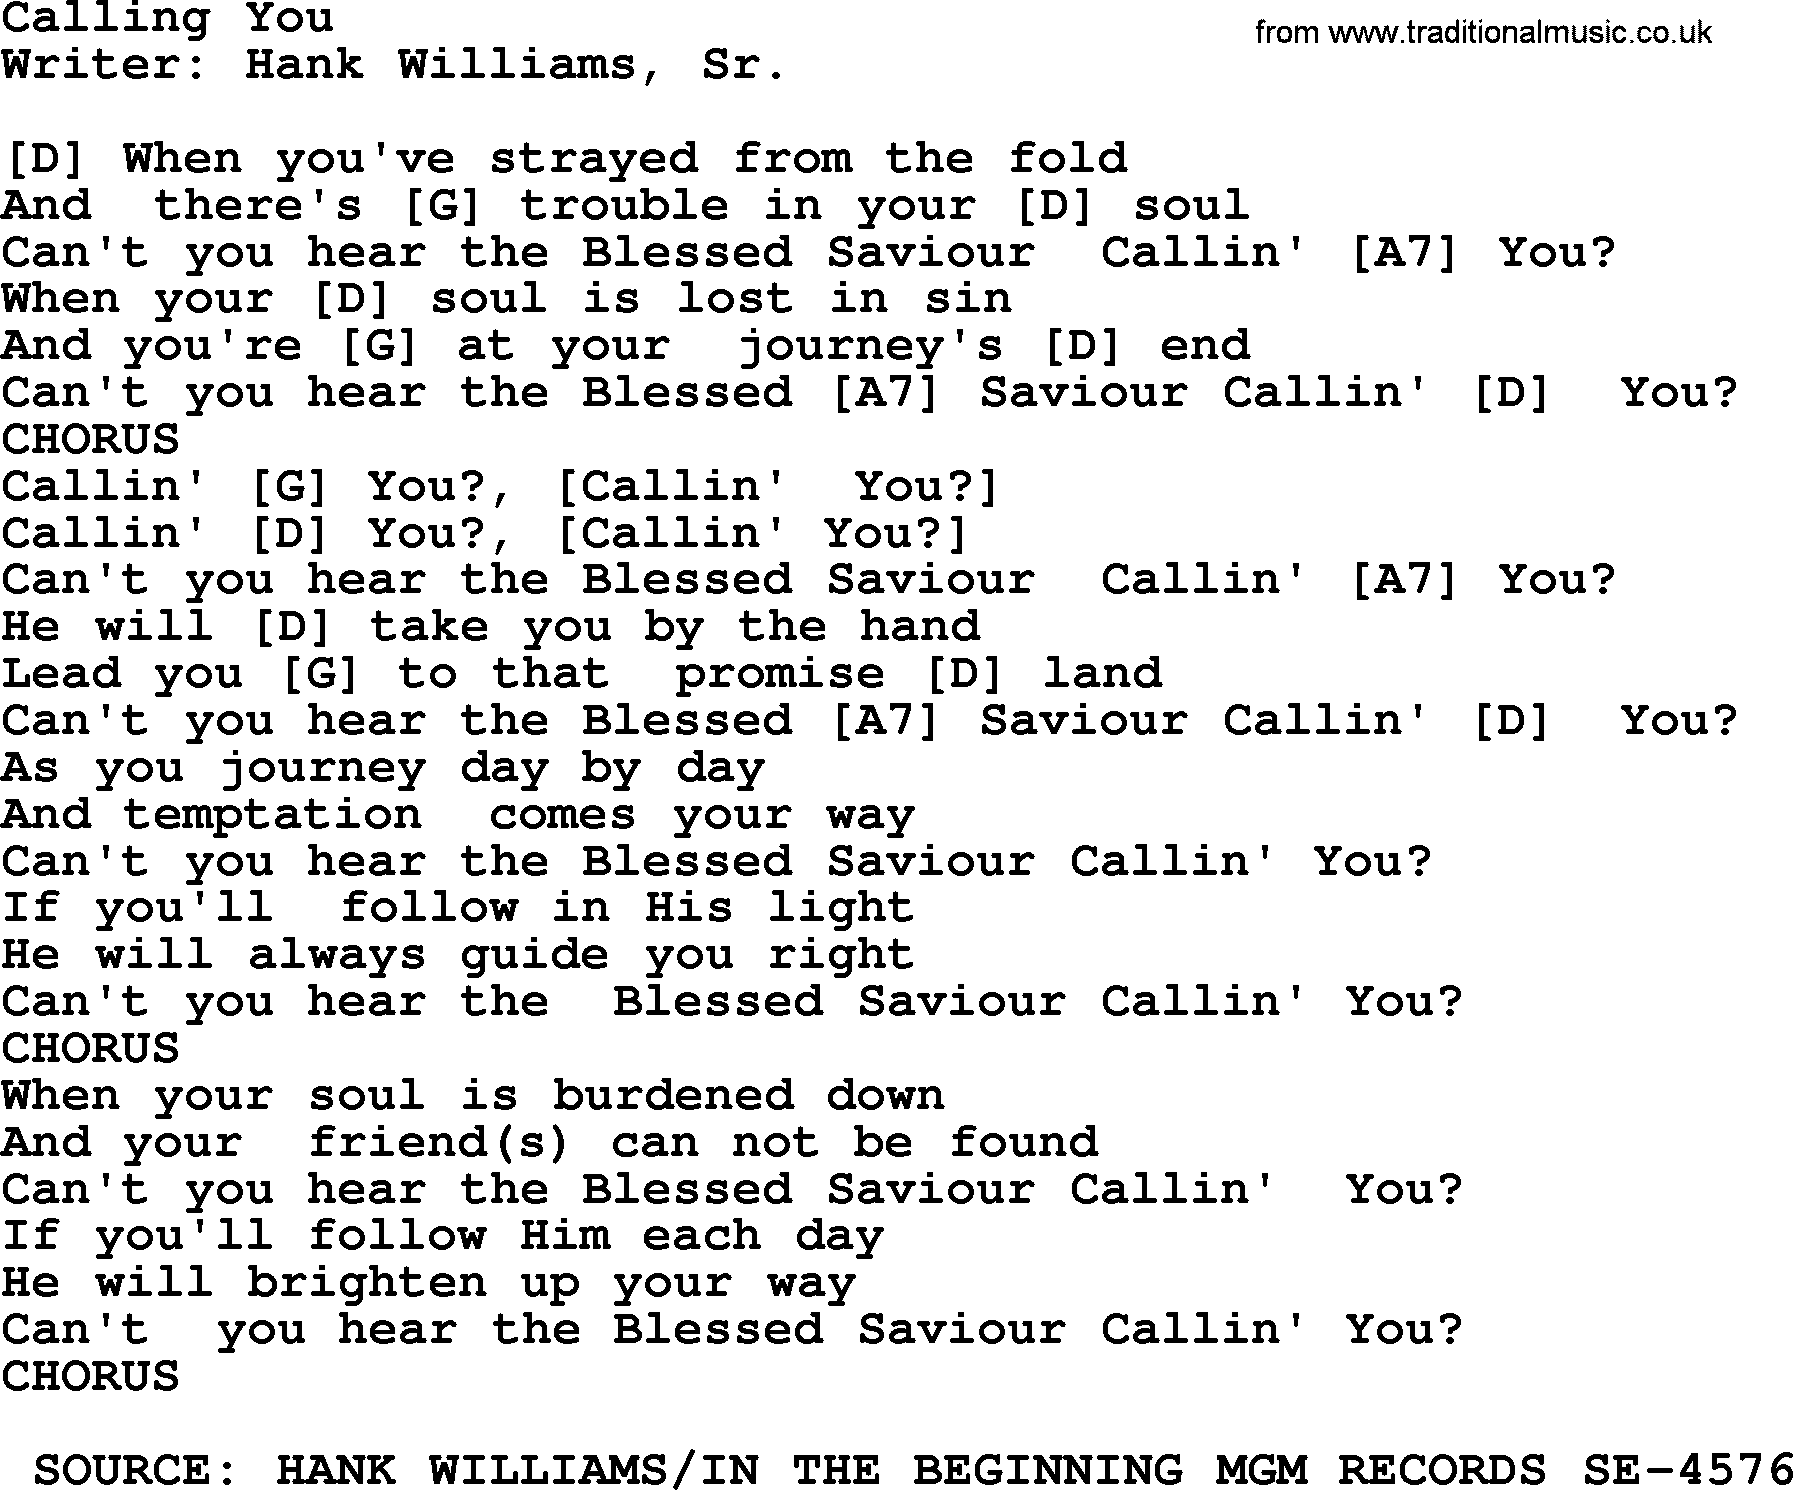 Hank Williams song Calling You, lyrics and chords